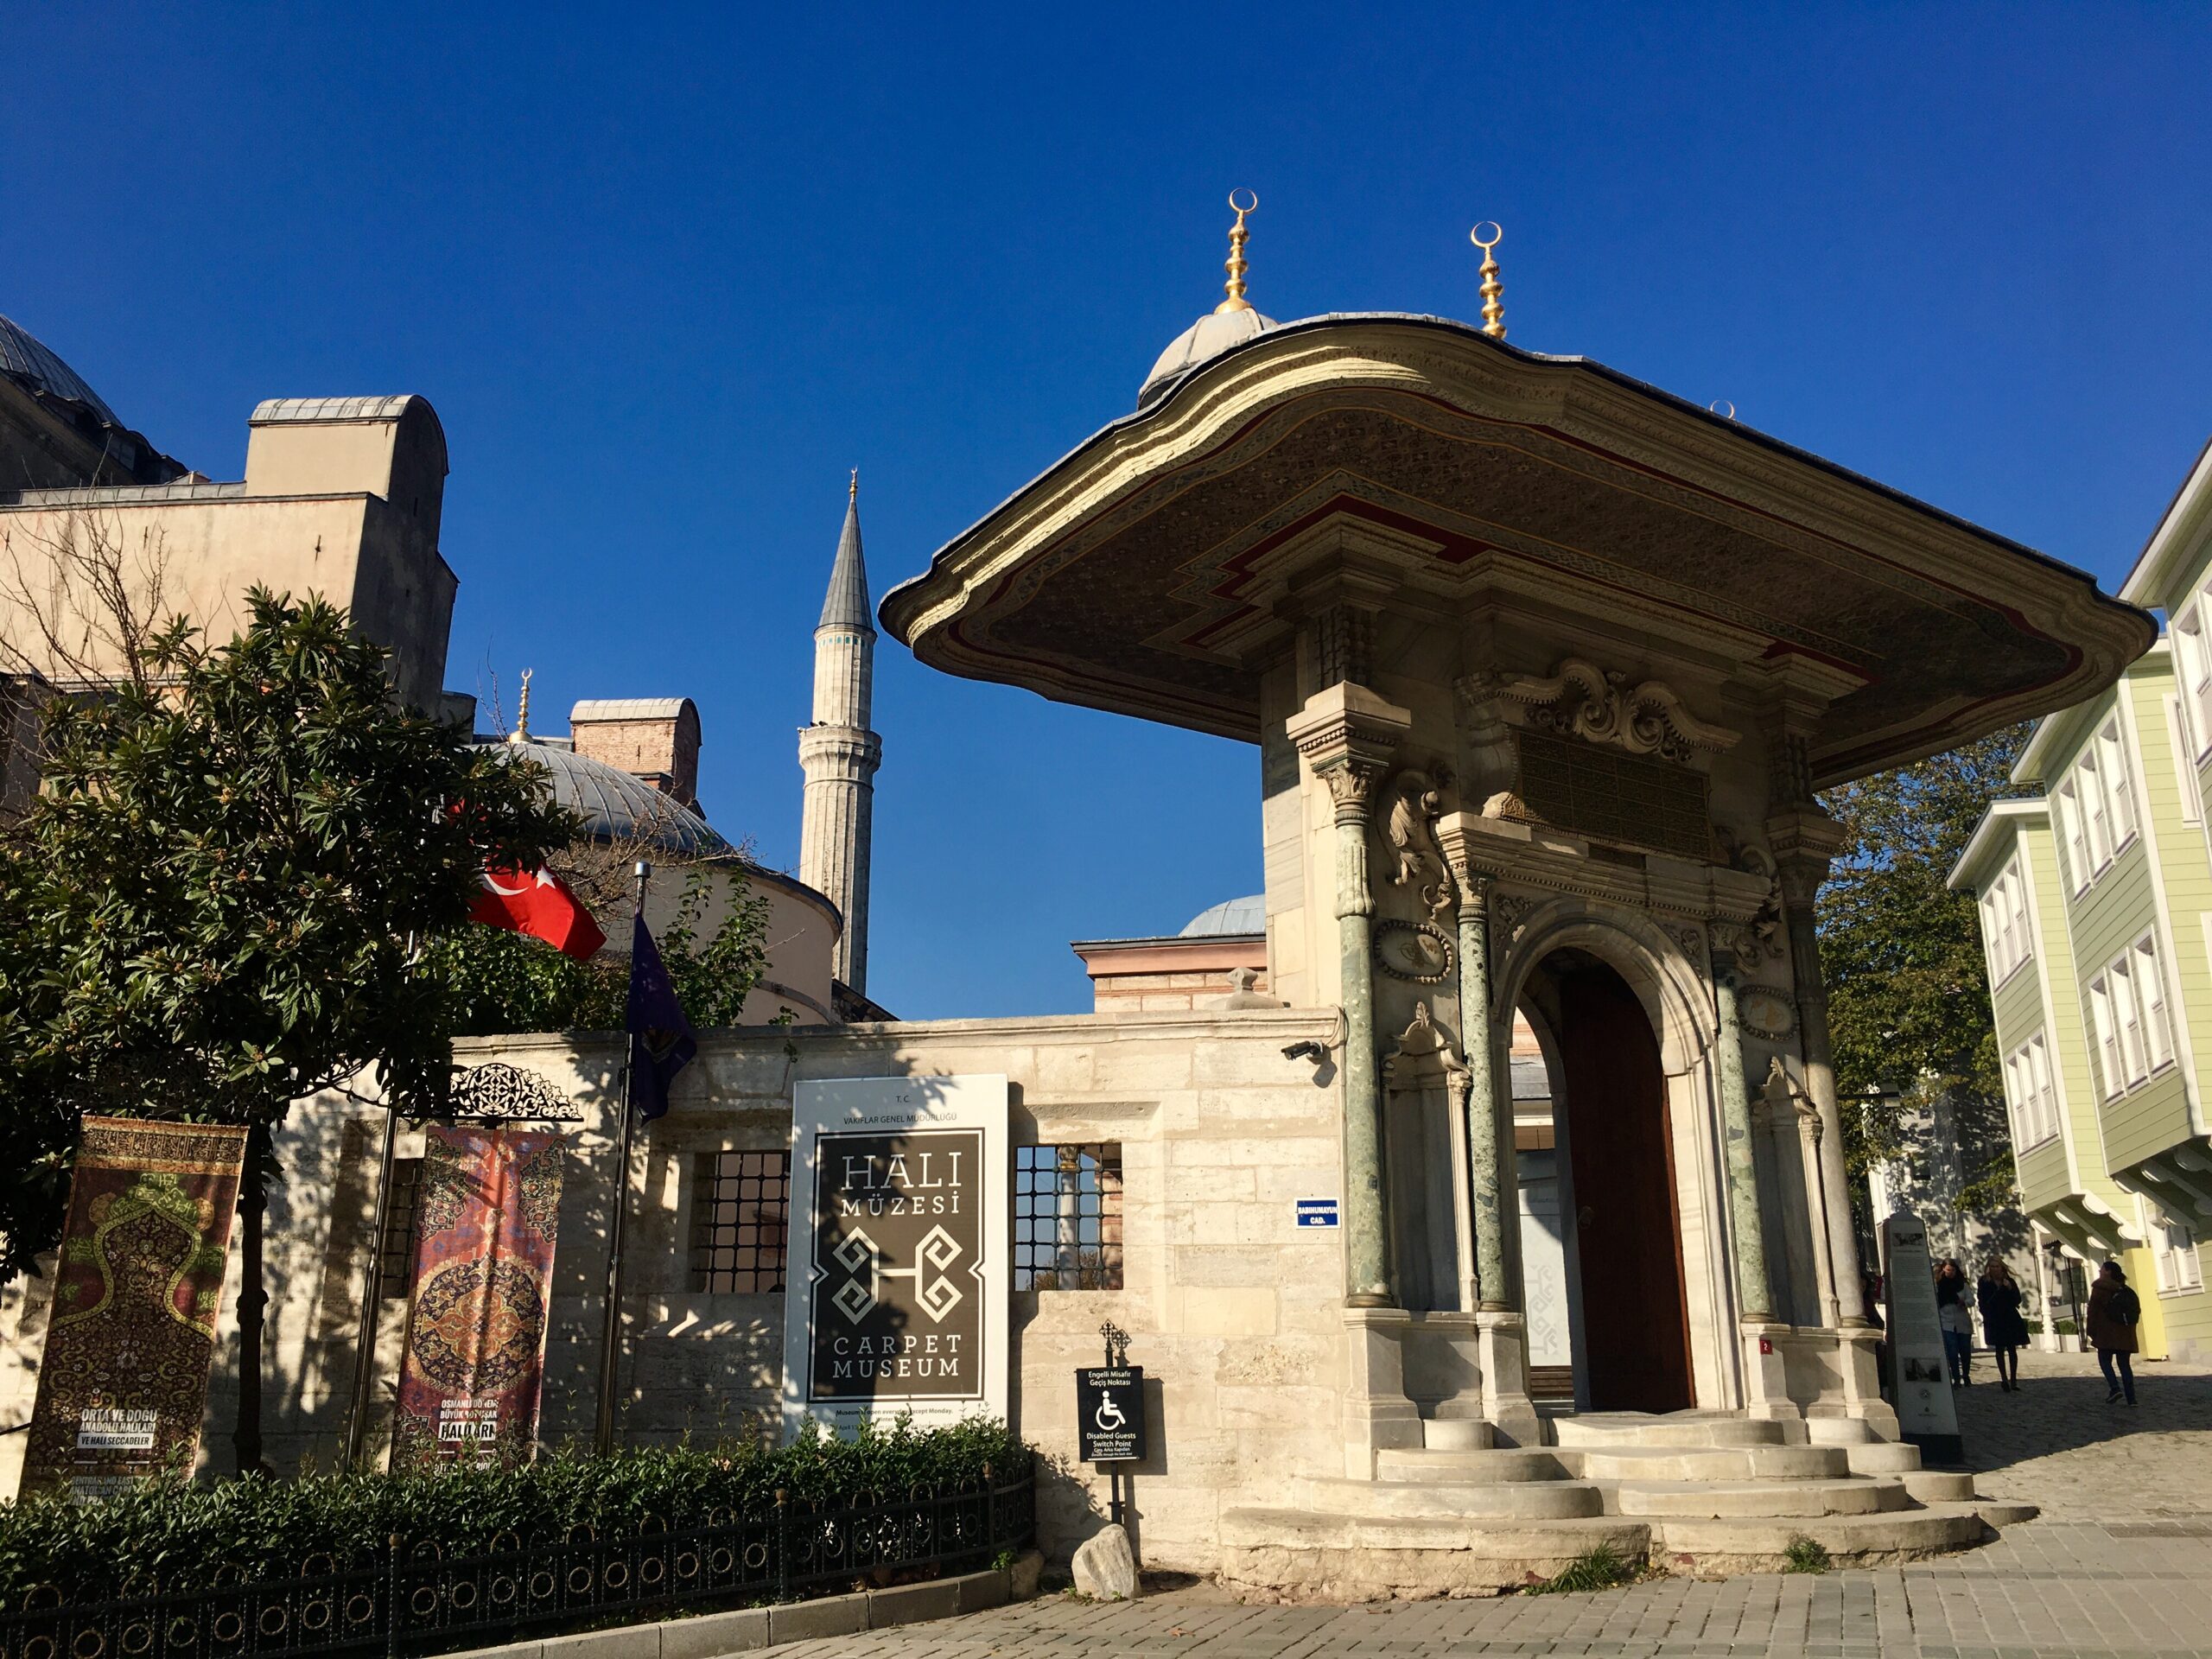 موزه فرش استانبول